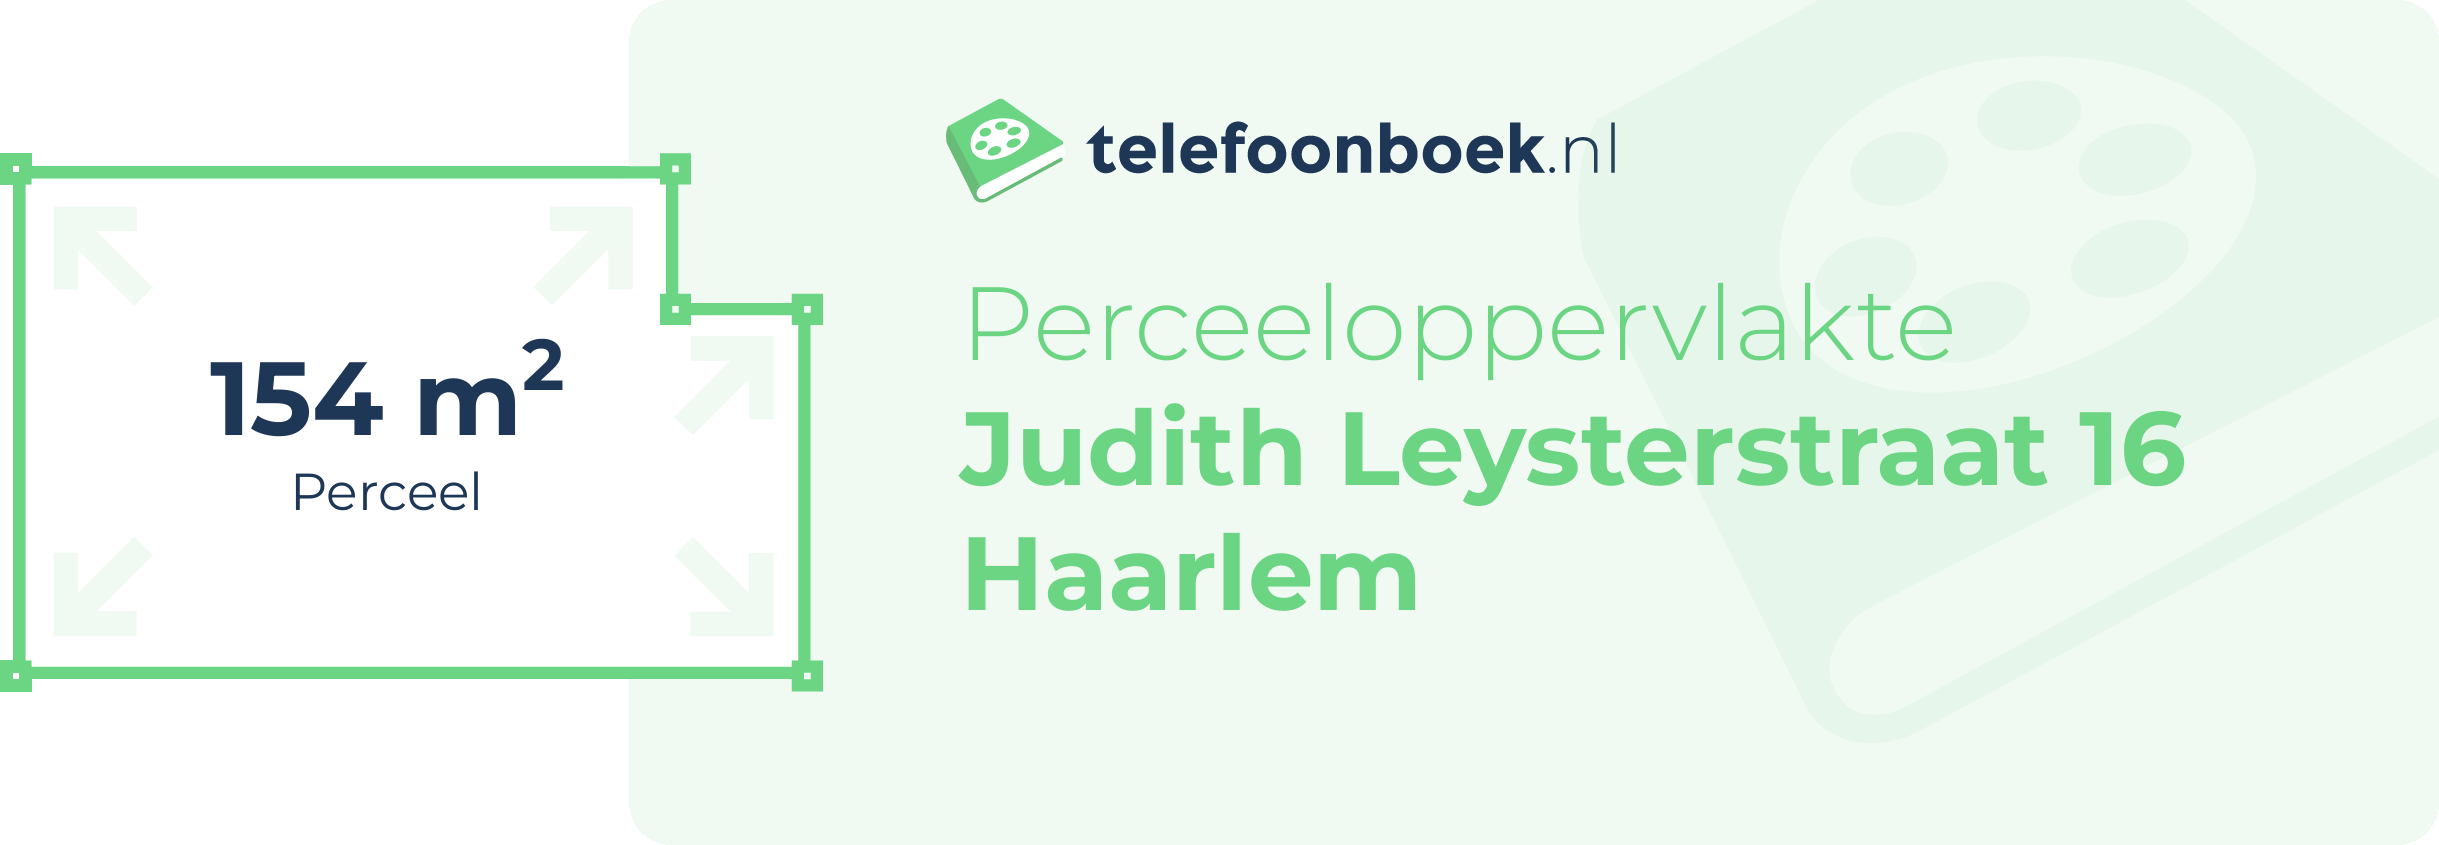 Perceeloppervlakte Judith Leysterstraat 16 Haarlem